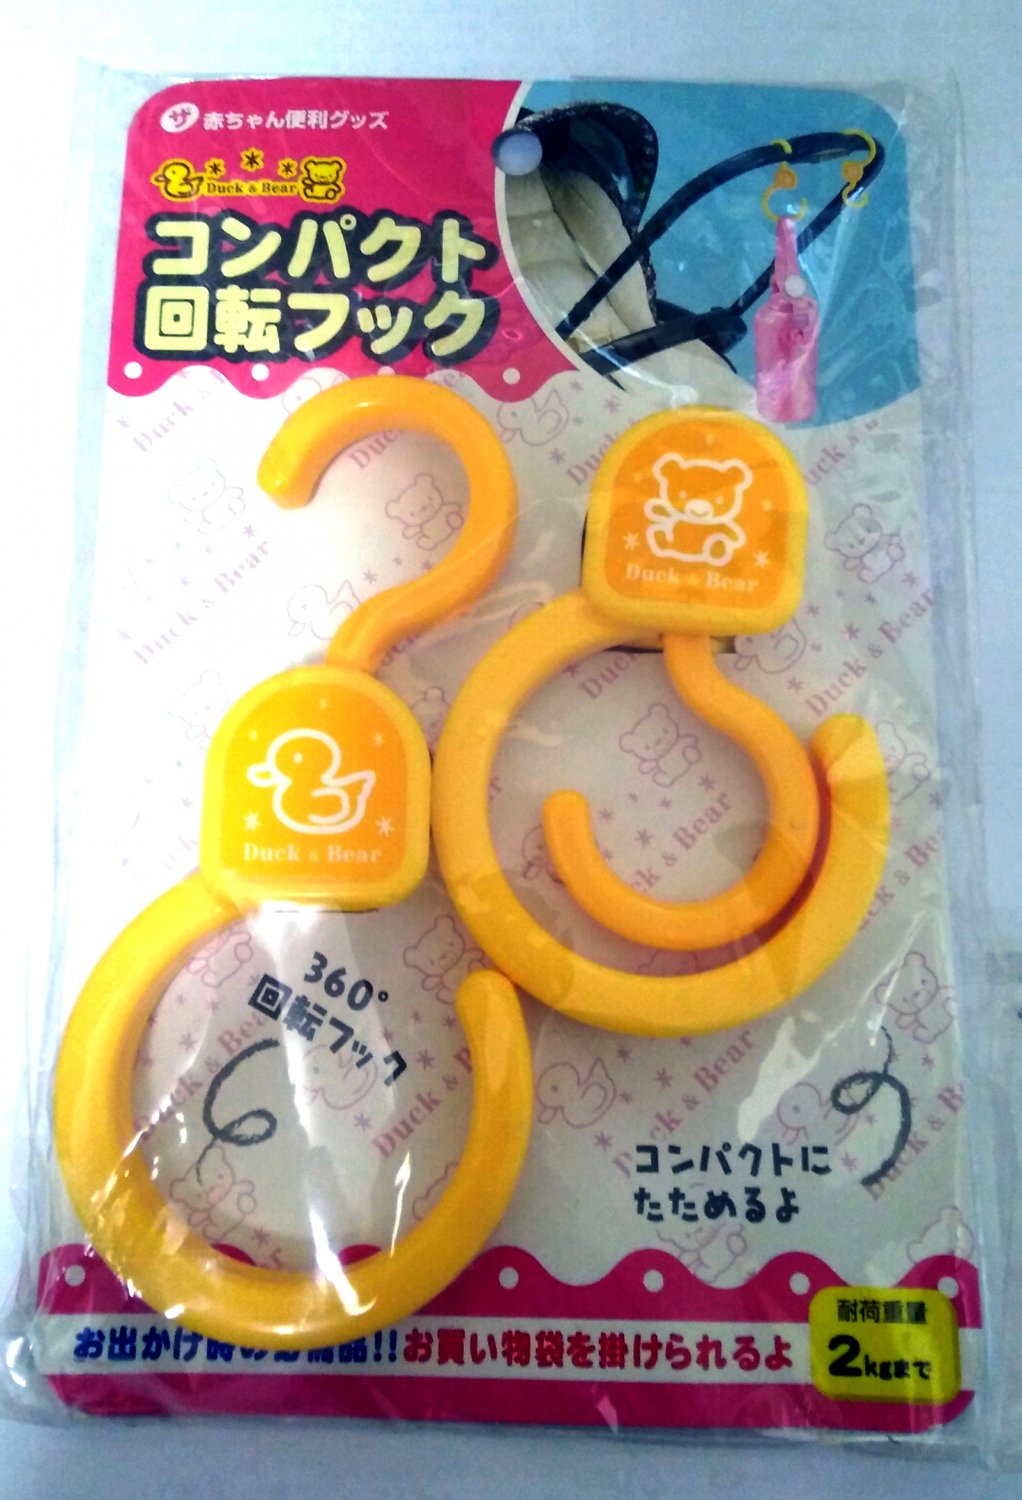 2 Pcs Set of Japan Baby Stroller Pram Duck & Bear Hook Pushchair Hooks Yellow